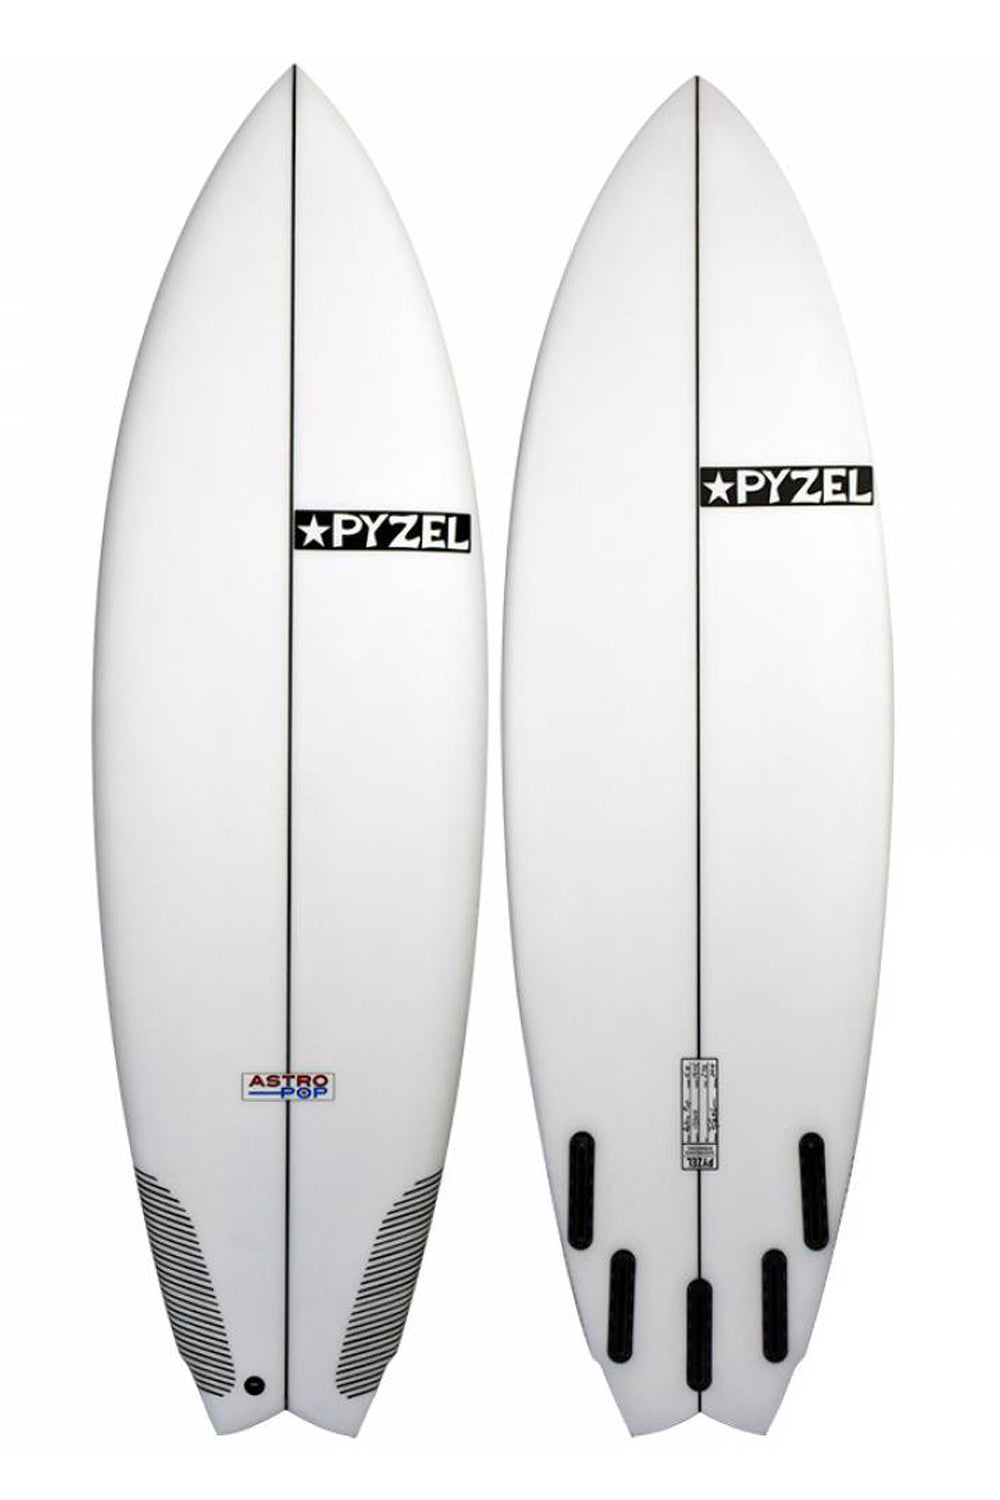 Pyzel Astro Pop Surfboard